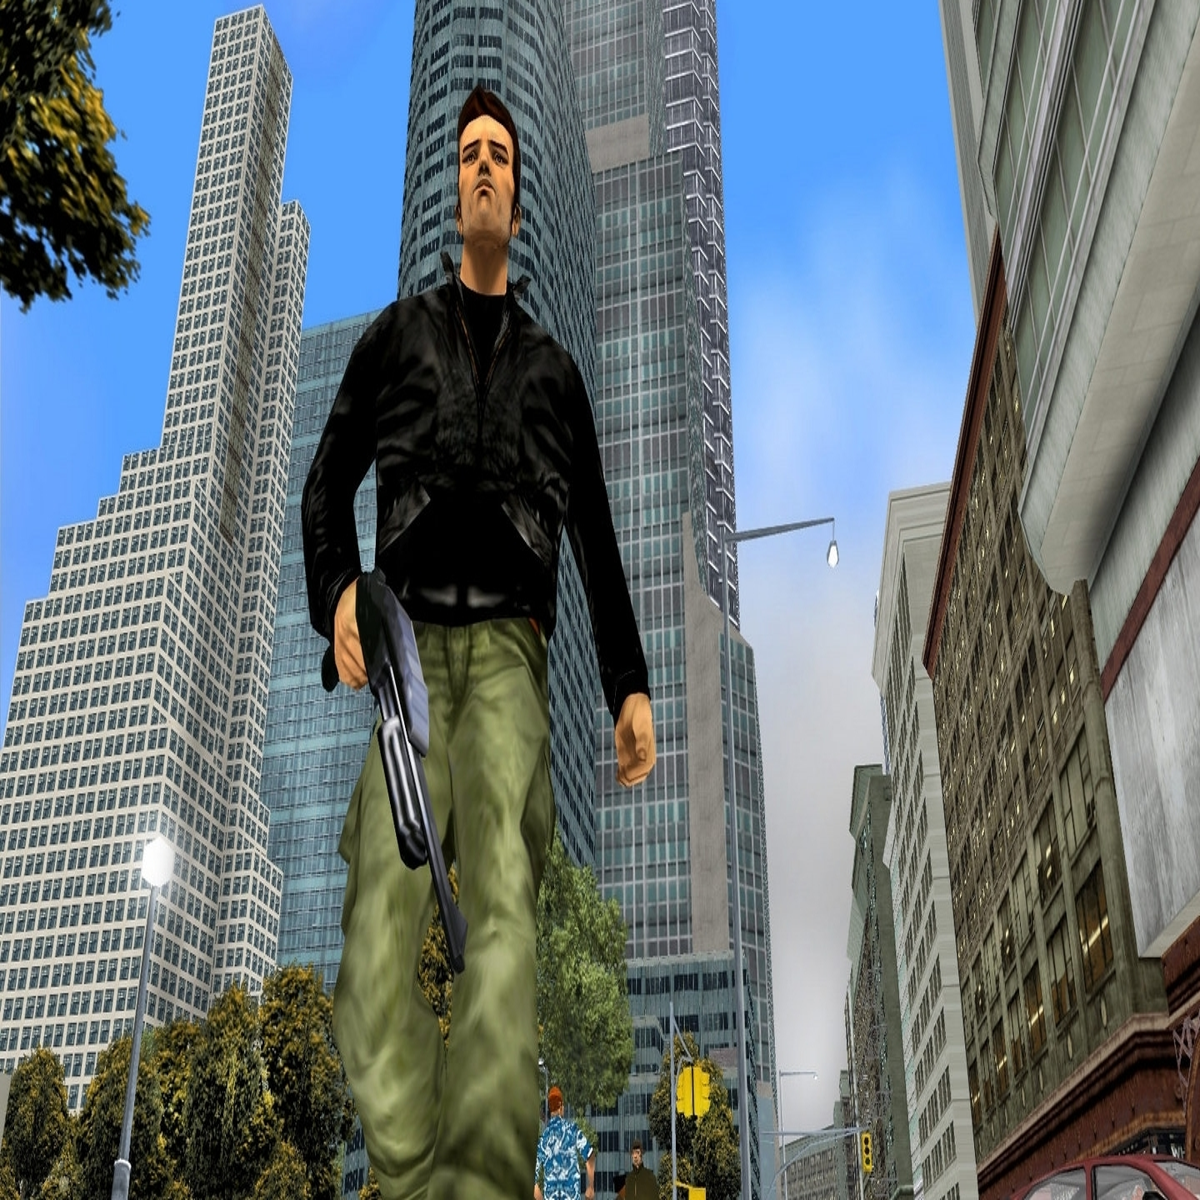 Grand Theft Auto: Vice City Stories gets a PC mod-port